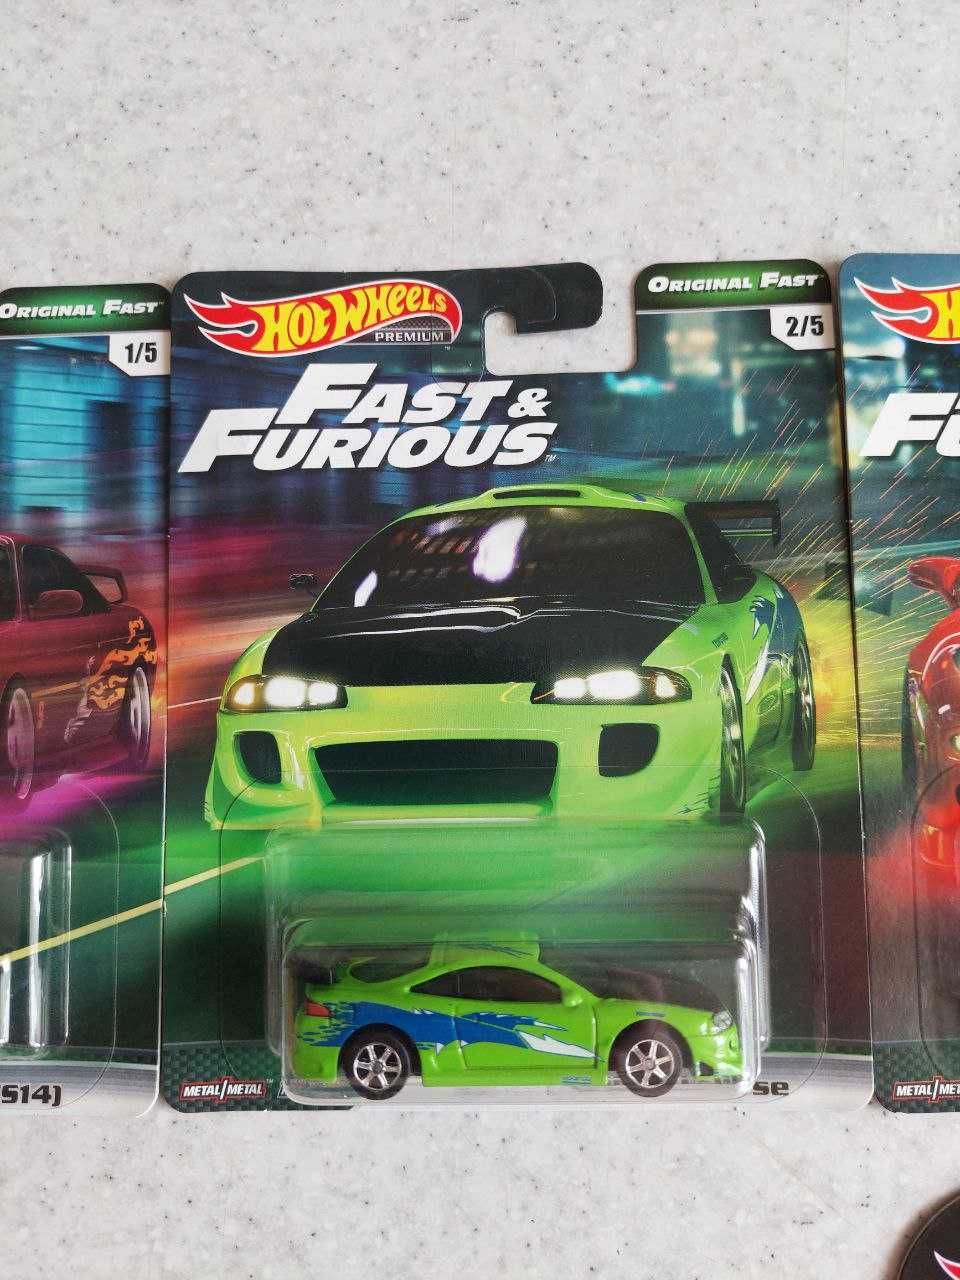 Продам набір Hot Wheels Premium Fast & Furious Original Fast Bundle